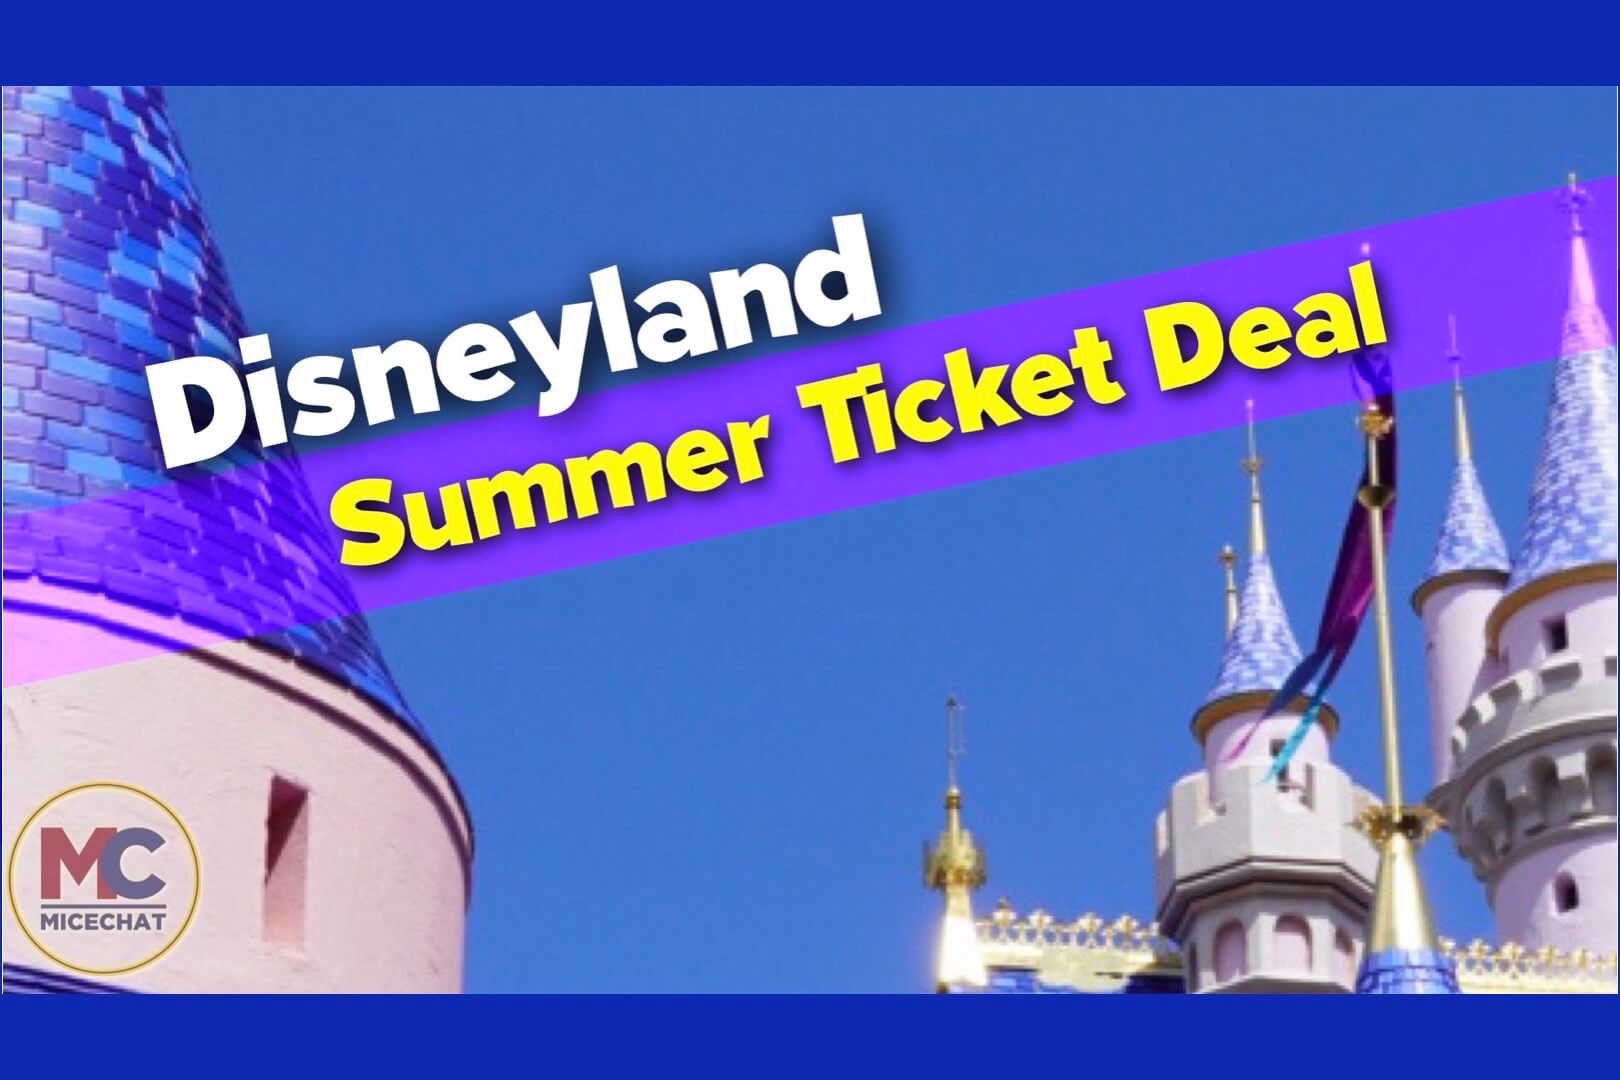 Summer Special Disneyland Ticket Deal Returns for California Residents